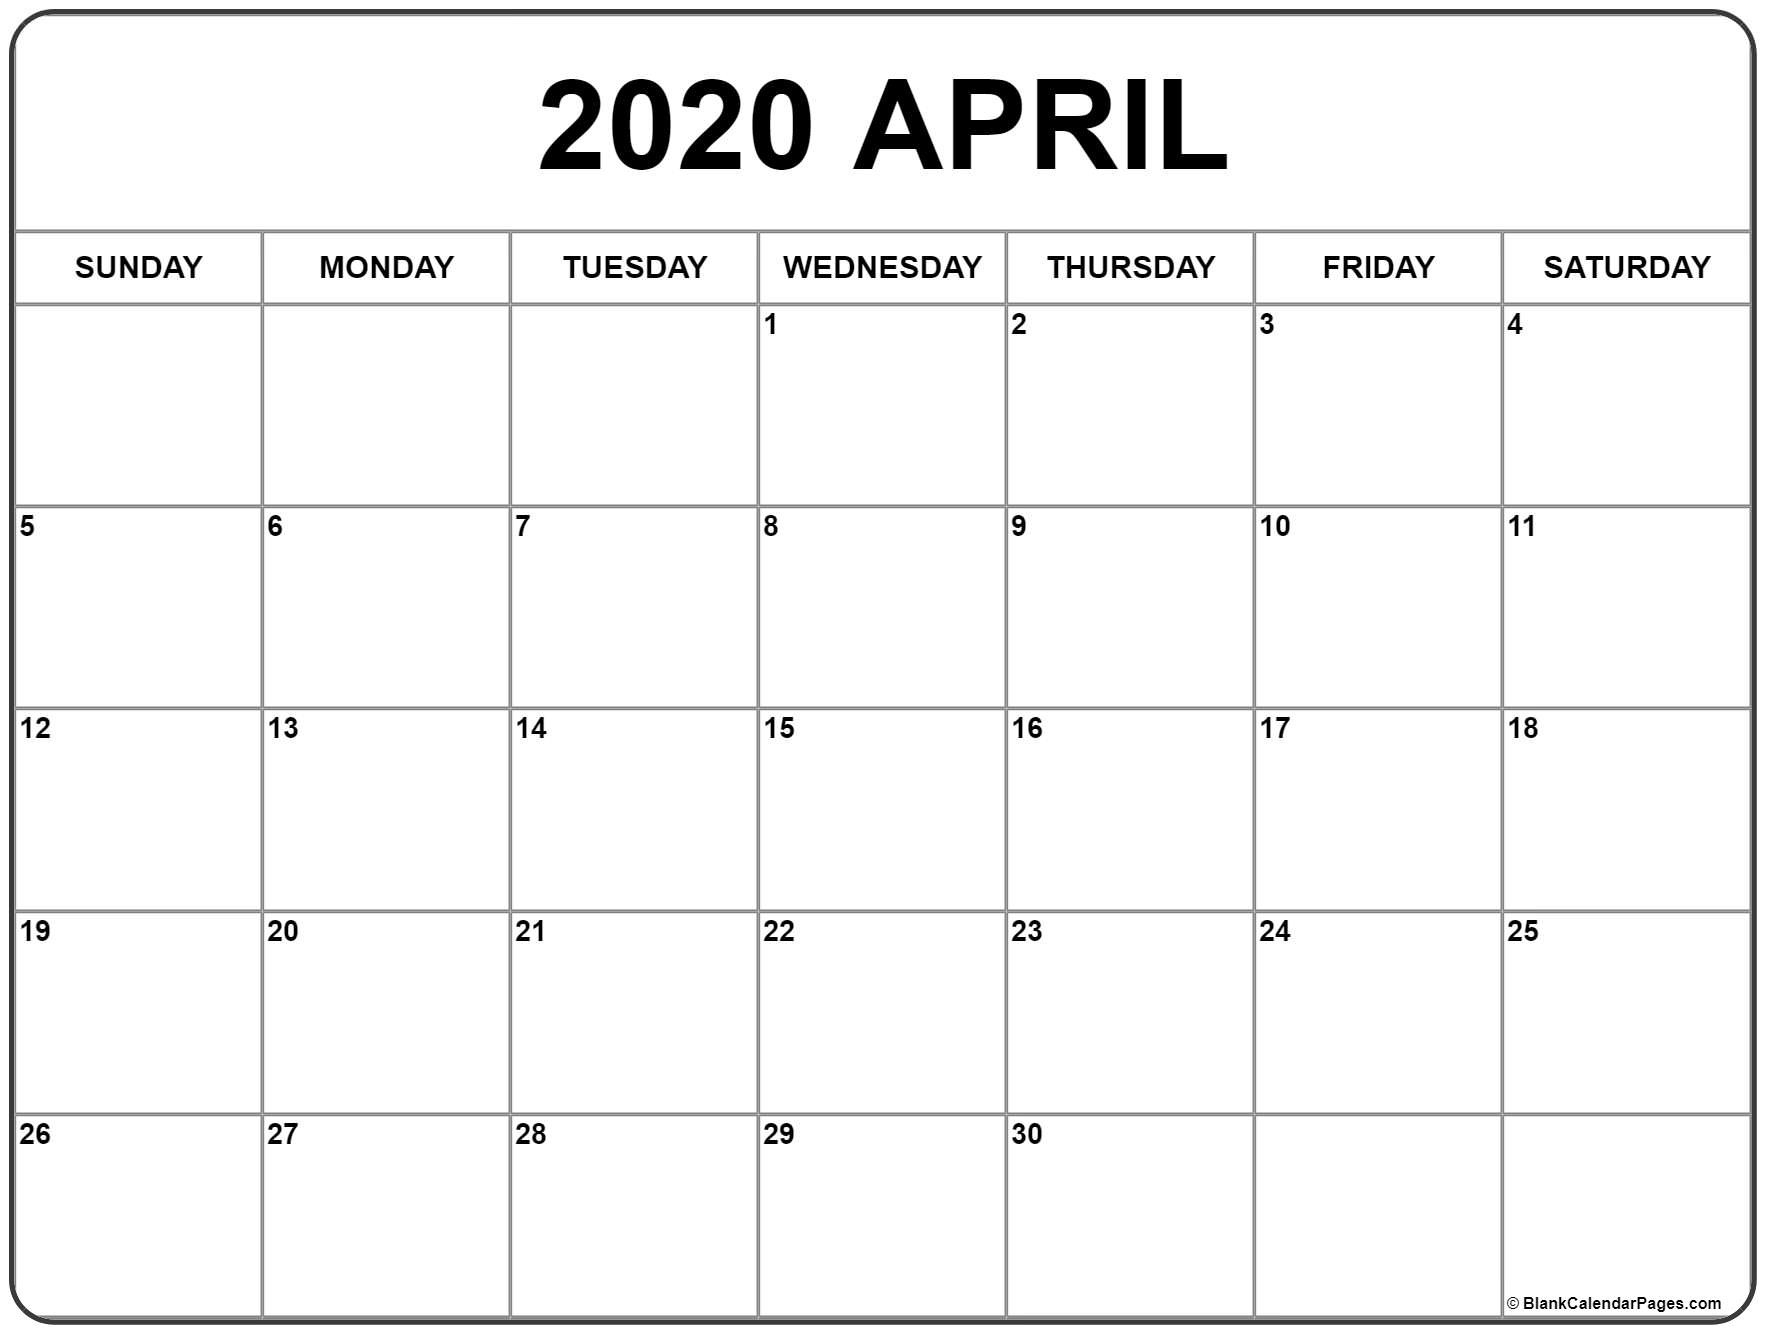 April 2020 Calendar | Free Printable Monthly Calendars-Blank Monthly Calendar Printable 2020 Bills Schedule